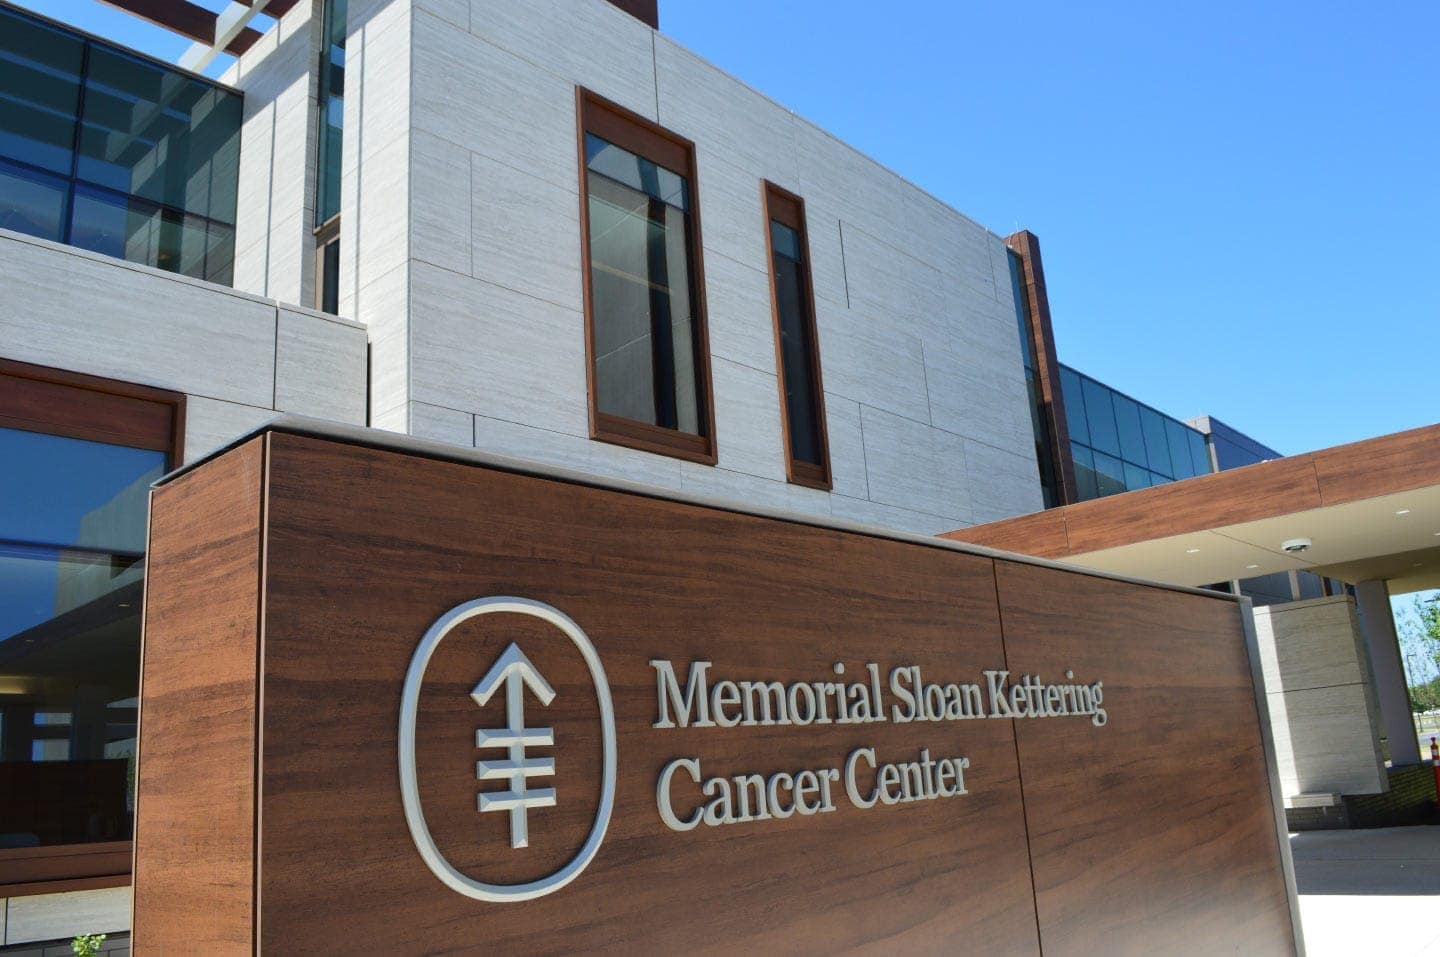 Memorial Sloan Kettering Cancer Center Nassau - Fundermax